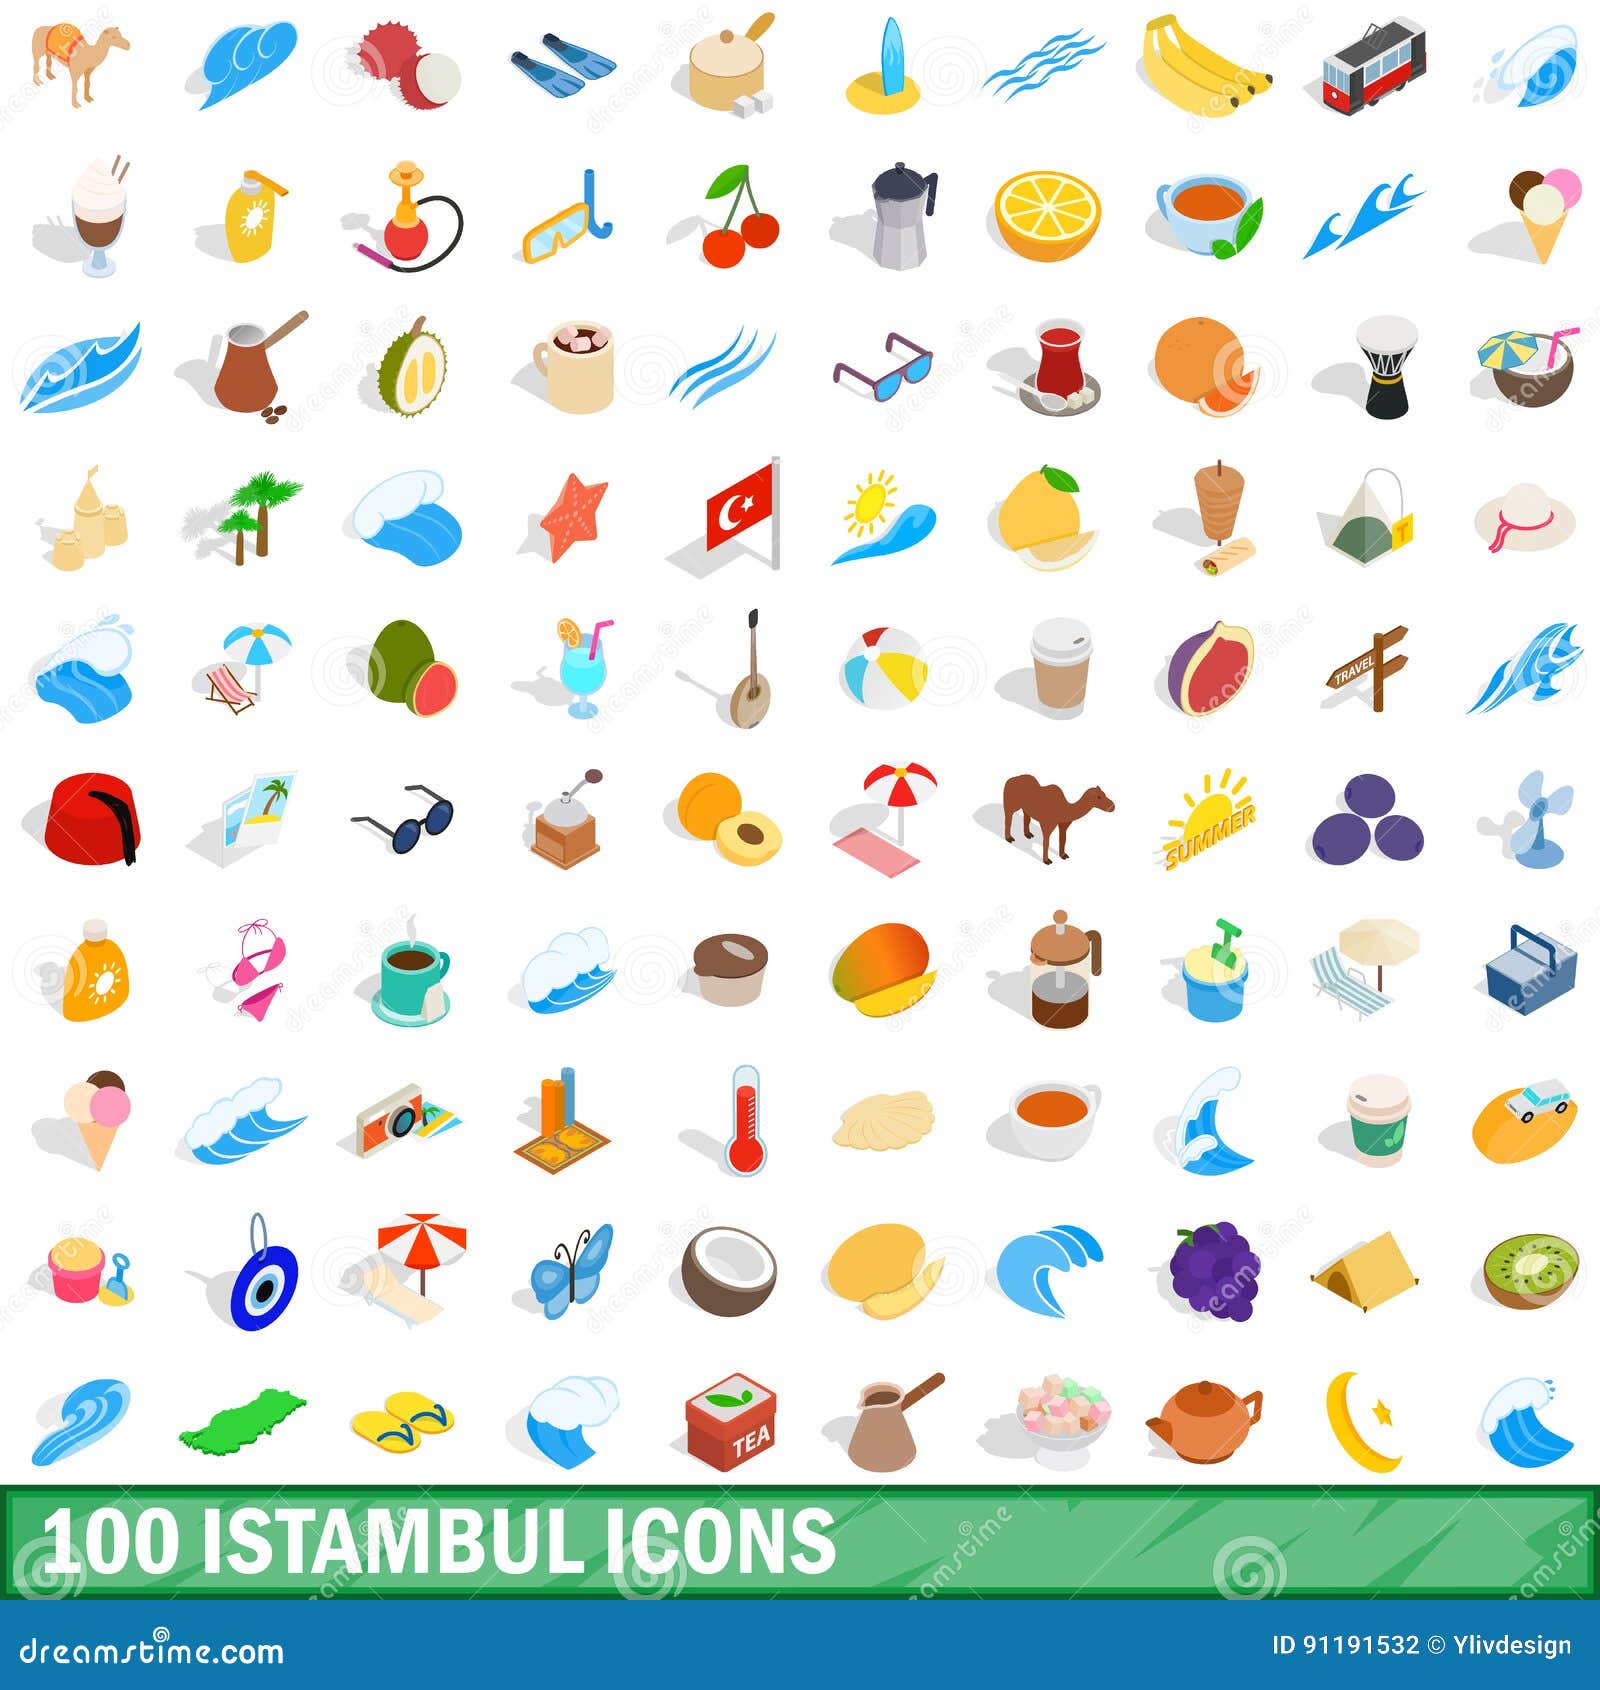 100 istambul icons set, isometric 3d style